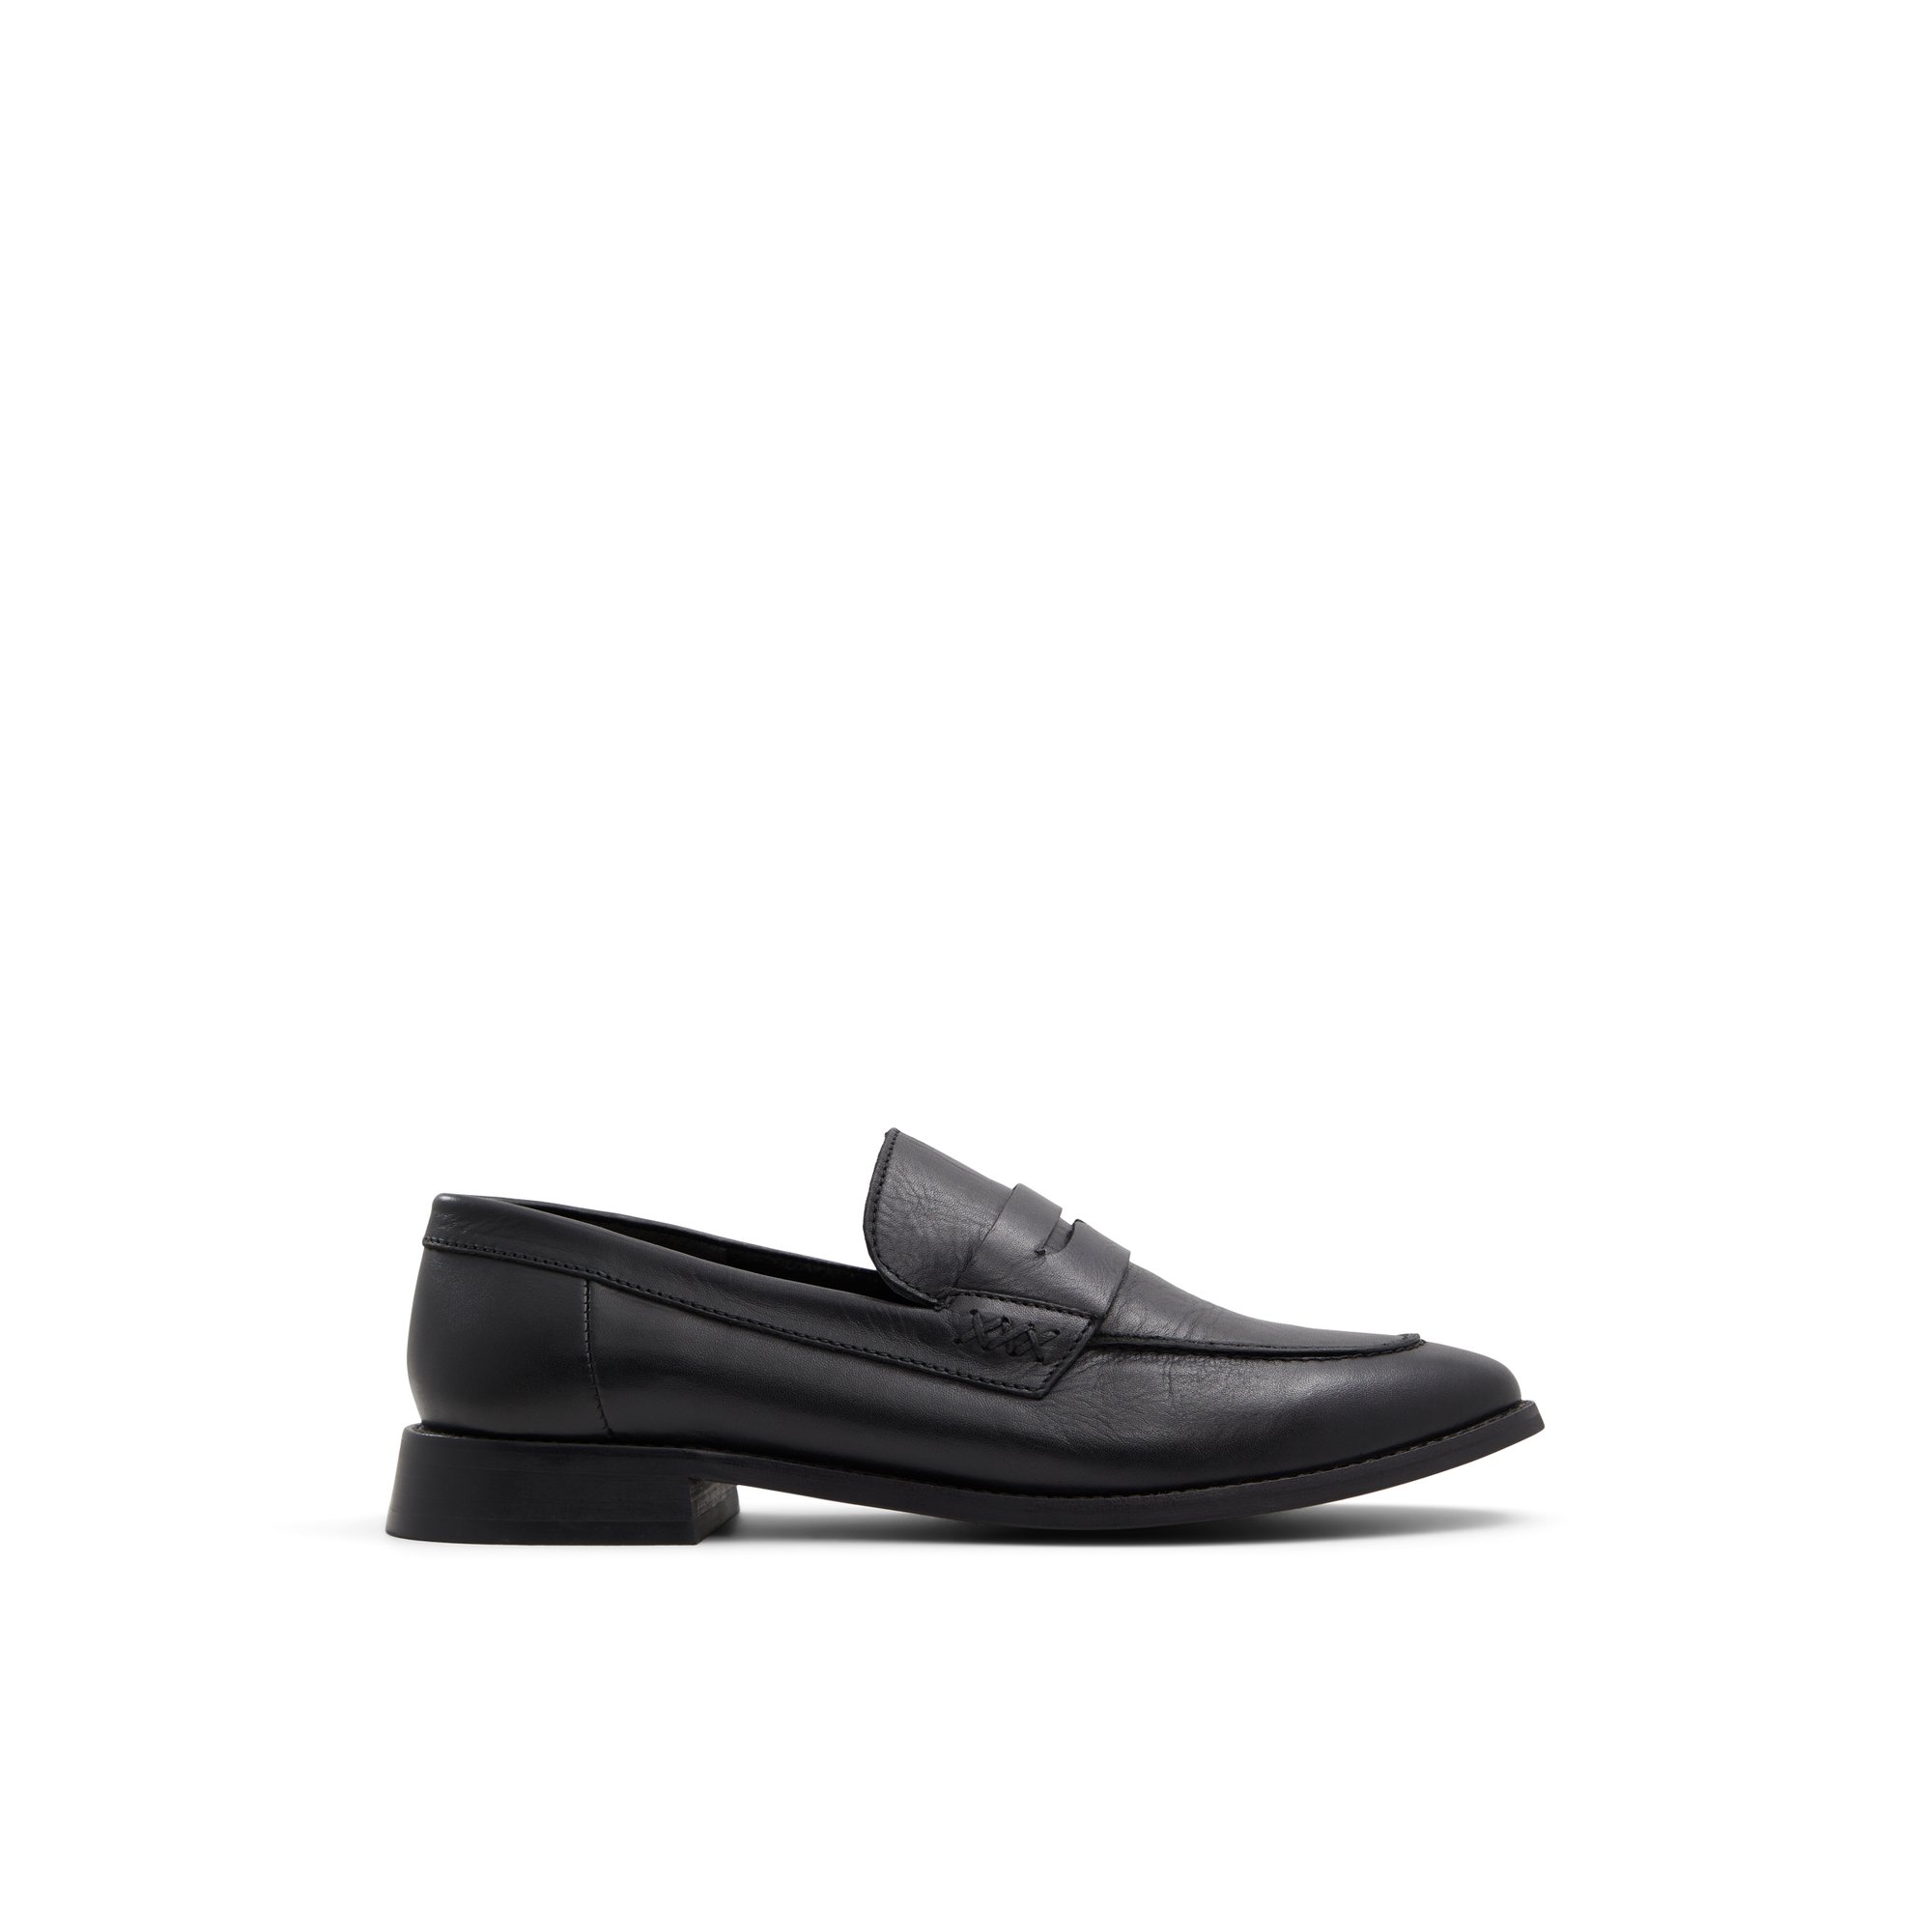 ALDO Focal - Women's Loafer - Black